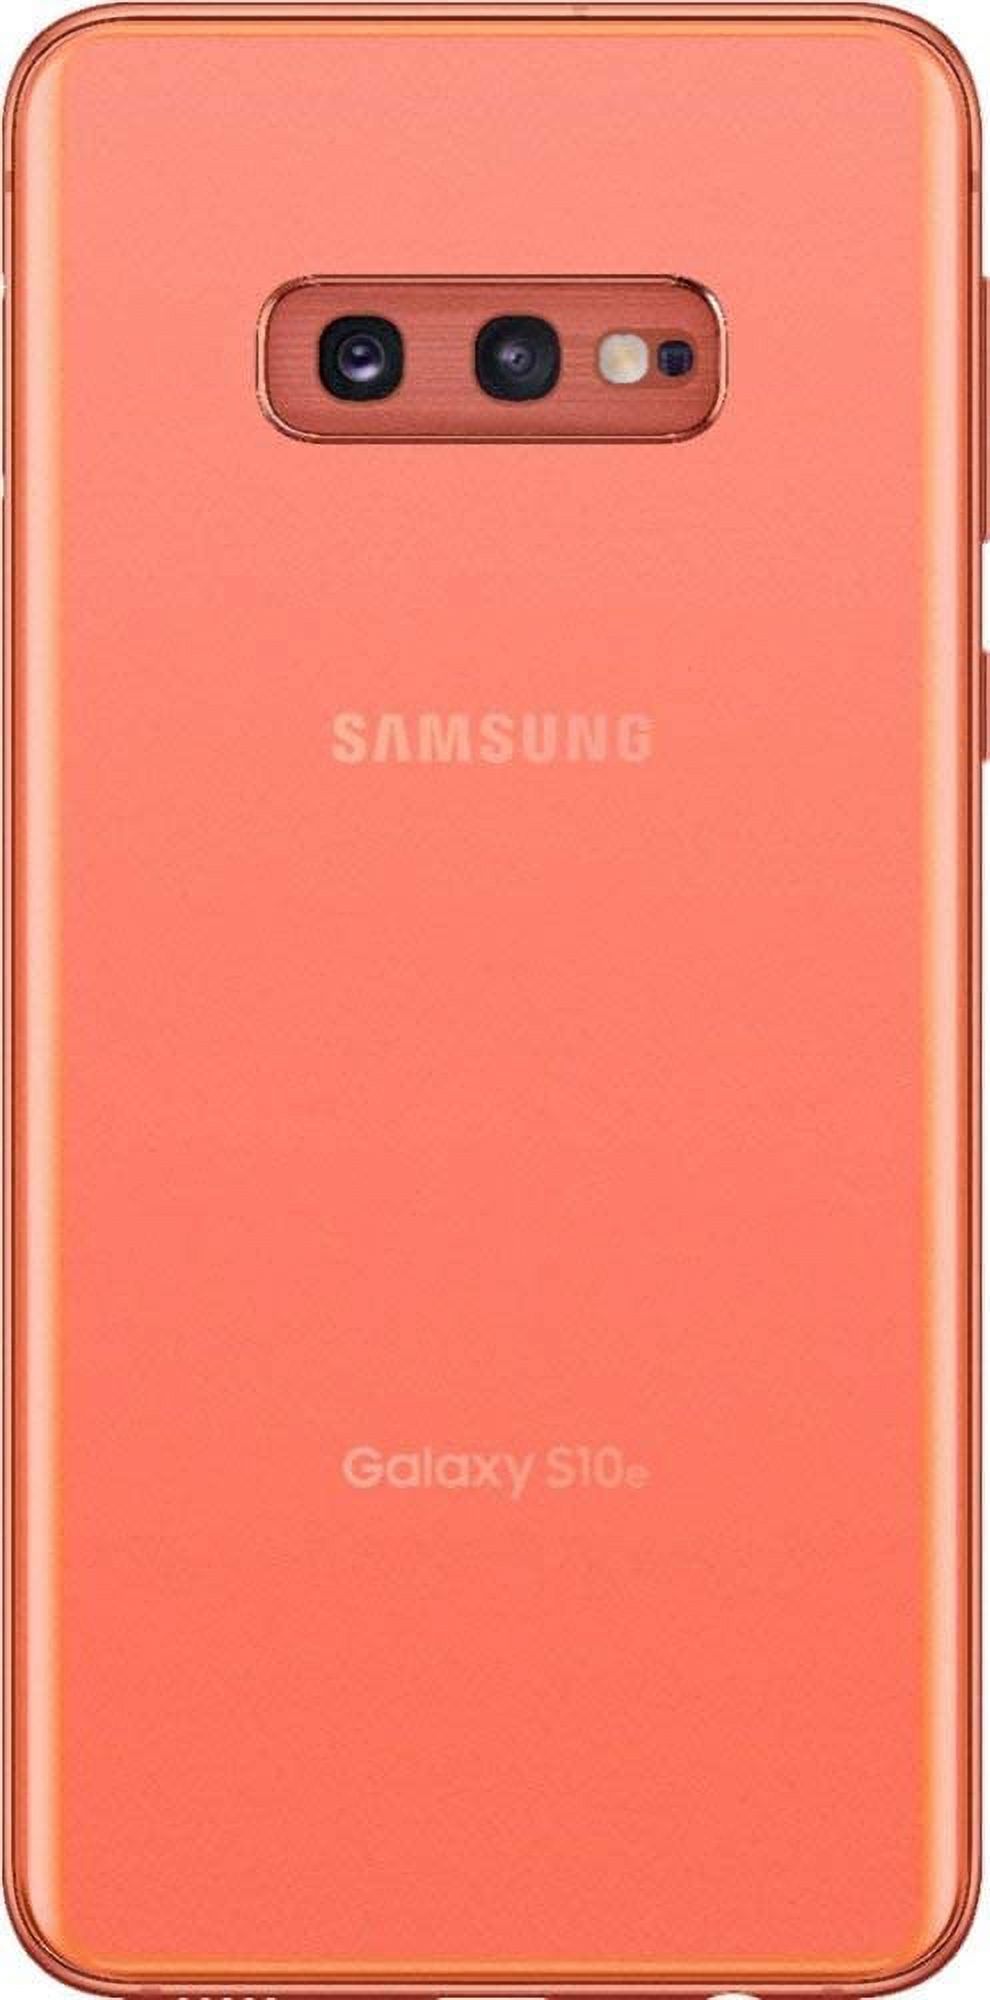 Restored Samsung Galaxy S10e SM-G970U 128GB AT&T Unlocked Smartphone - Flamingo Pink (Refurbished) - image 3 of 5